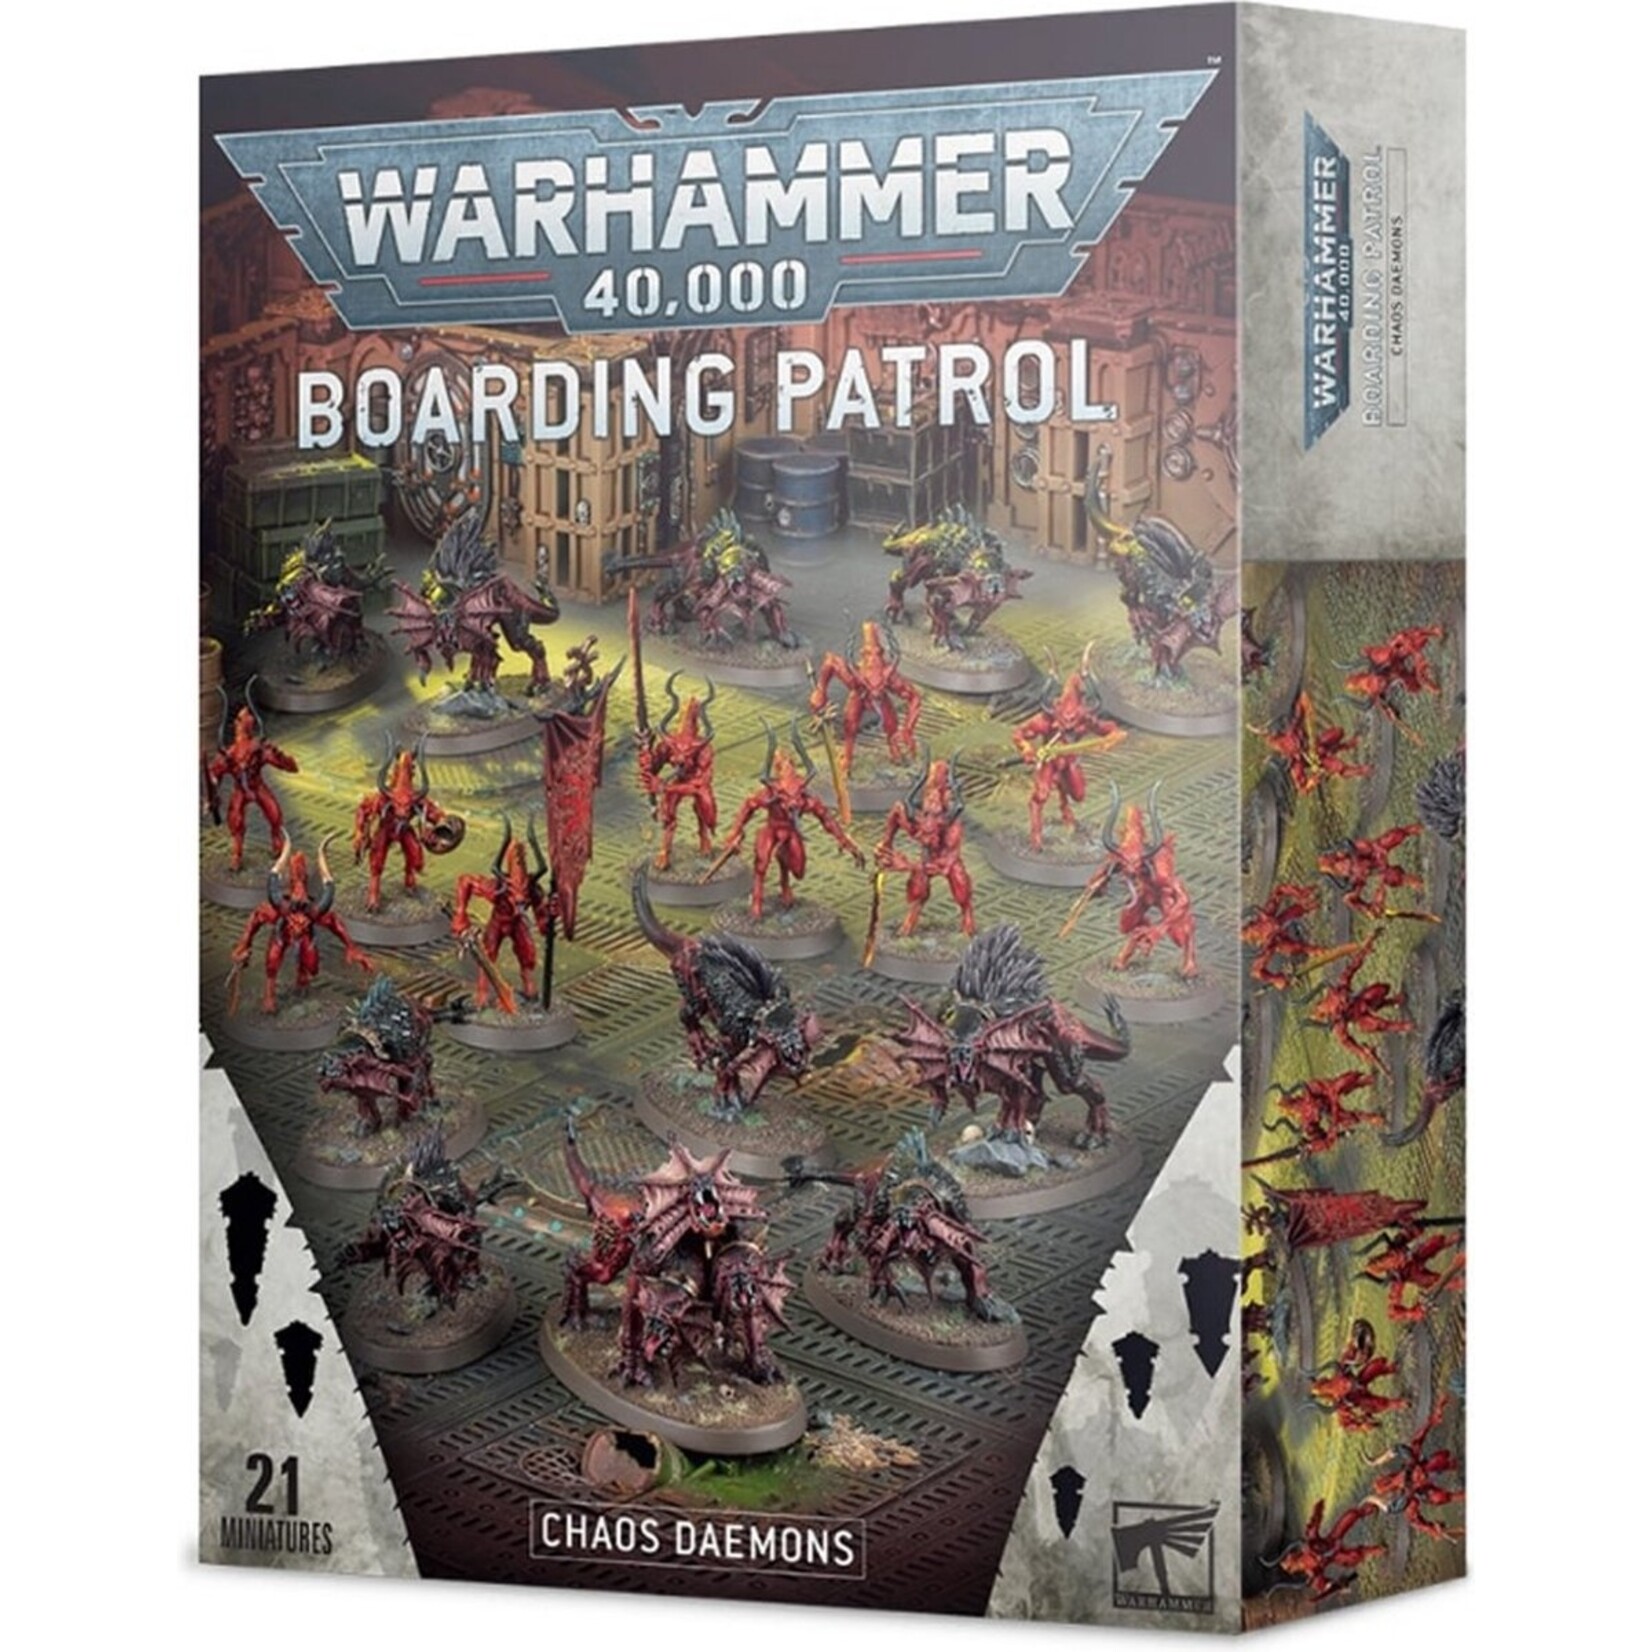 Warhammer: 40.000 Boarding Patrol: Chaos Daemons